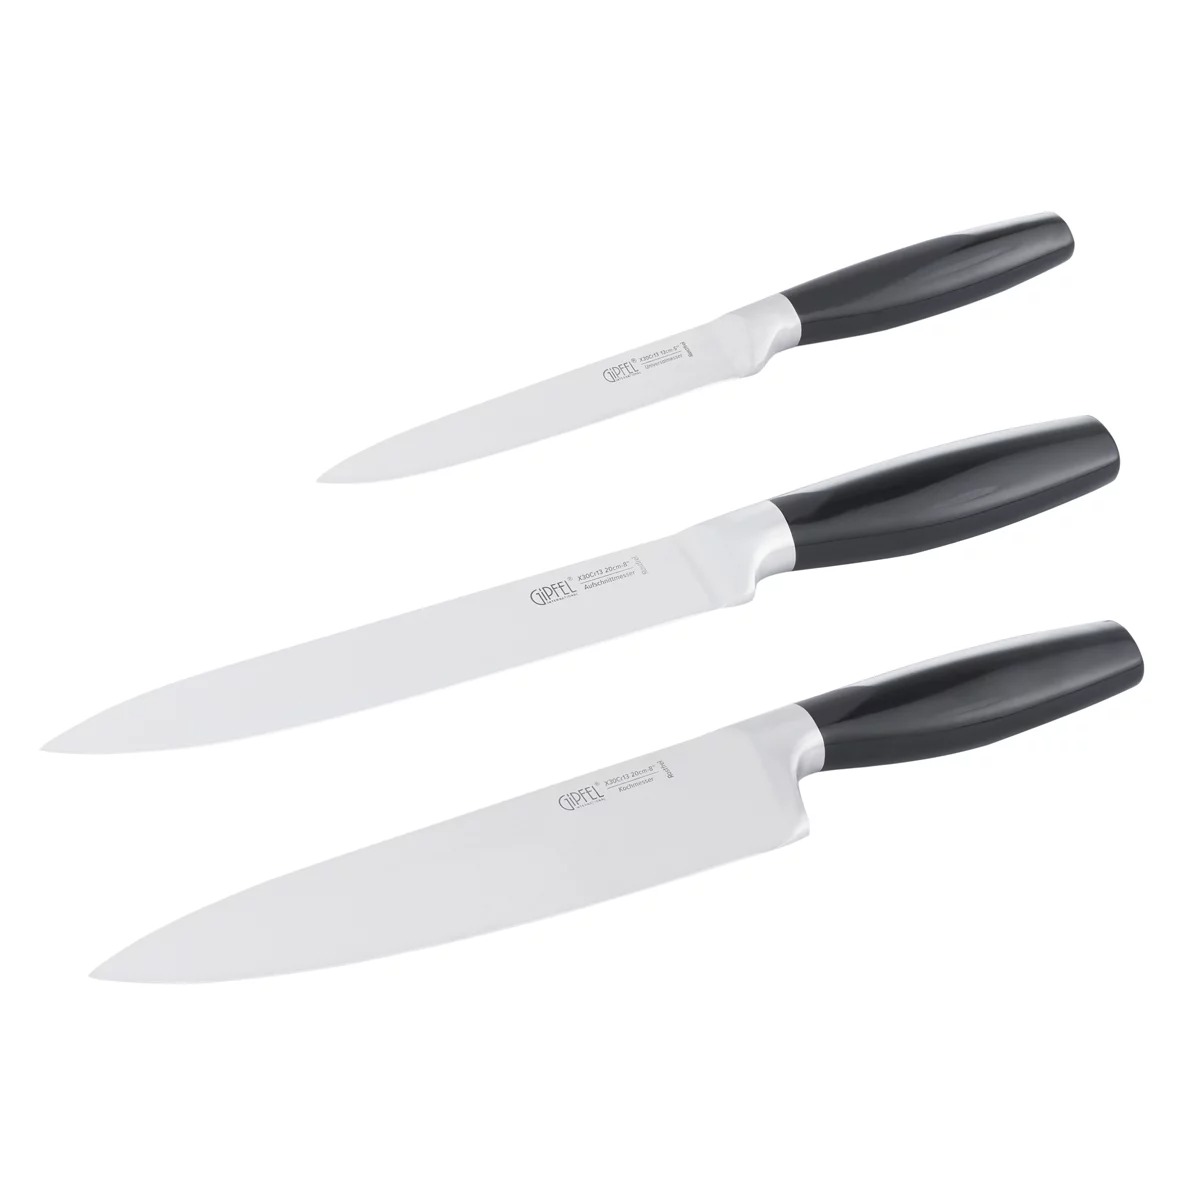 Набор Gipfel Zooma из 3-х кухонных ножей набор кухонных ножей gipfel japanese 6629